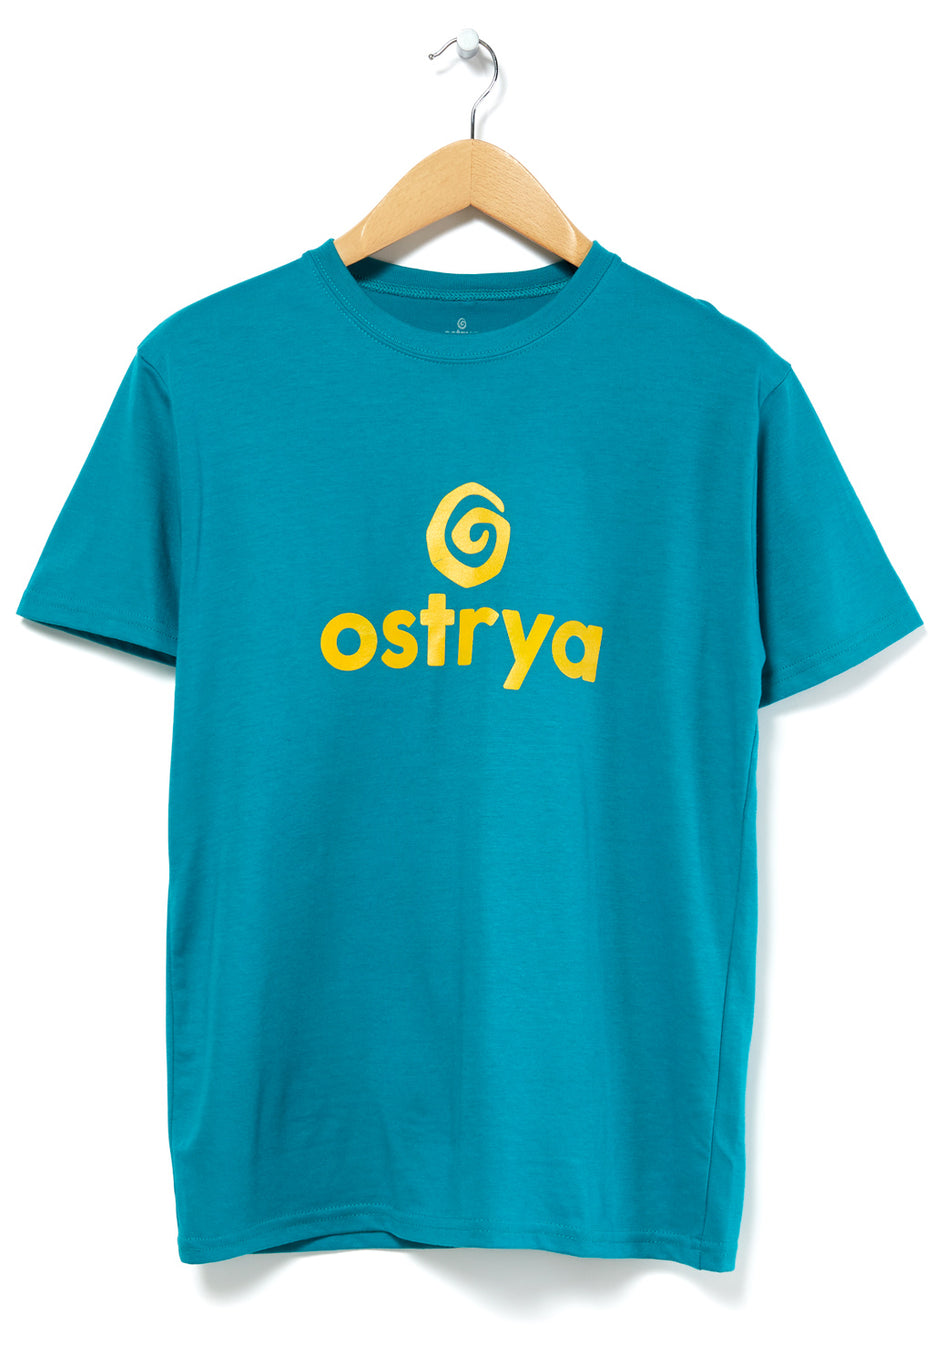 Ostrya Emblem Men's Organic T-Shirt 6